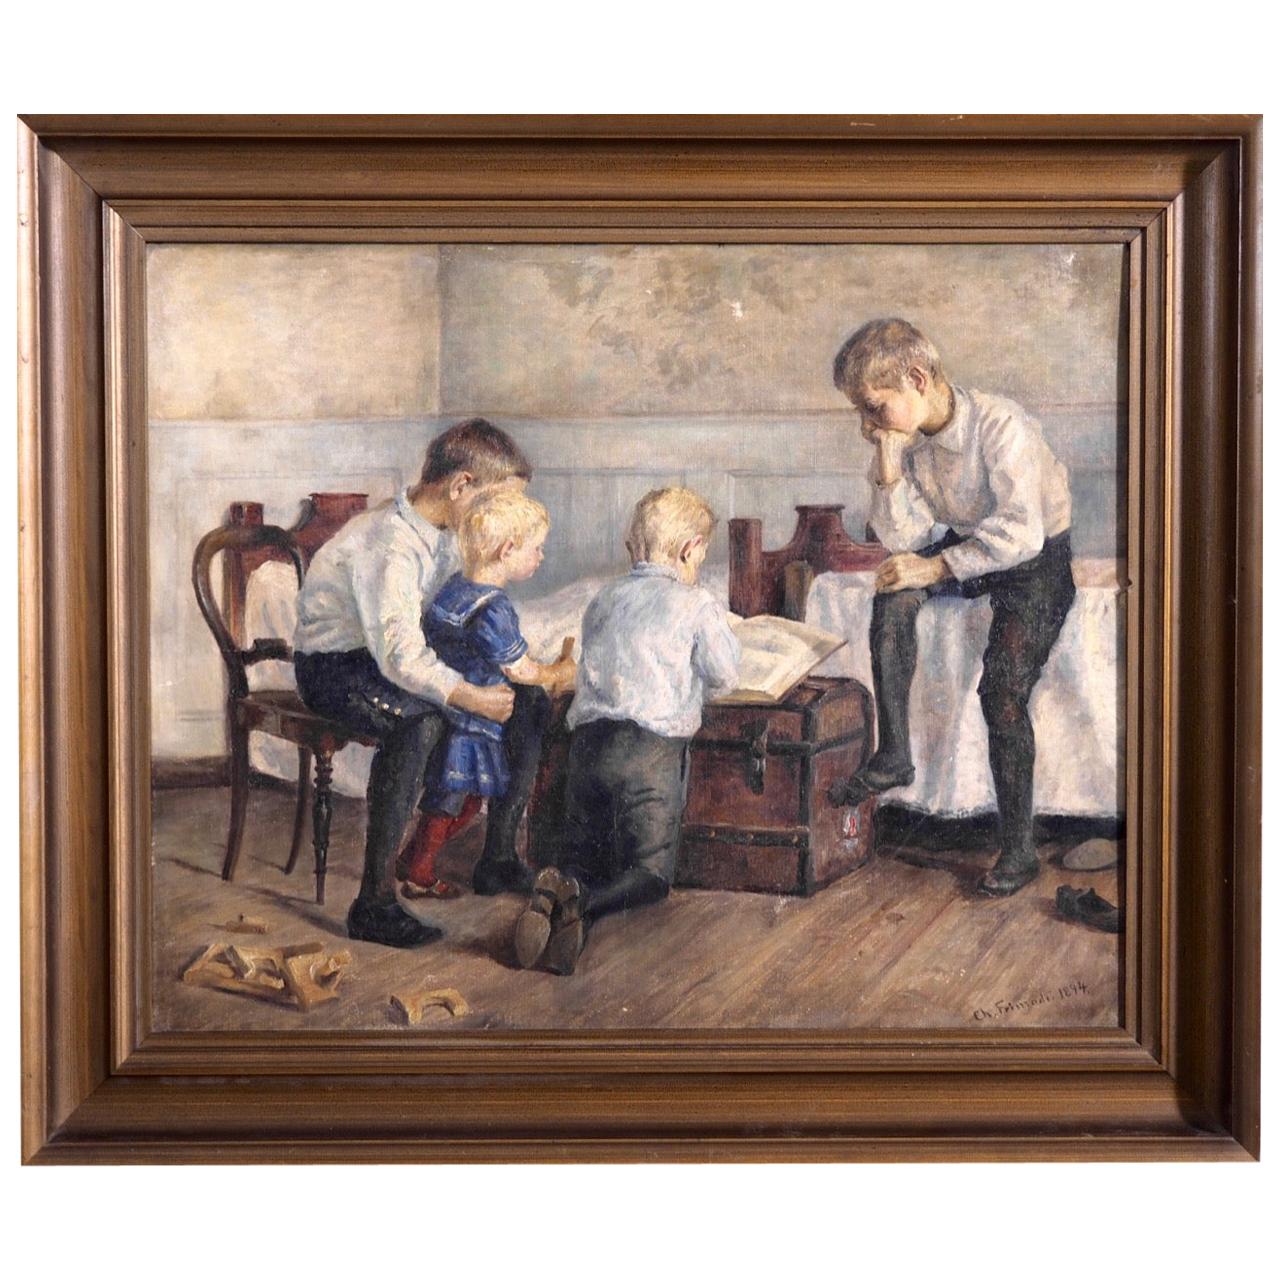 Important Danish Interior Painting, Charlotte Frimodt Signed “Ch. Frimodt 1894”